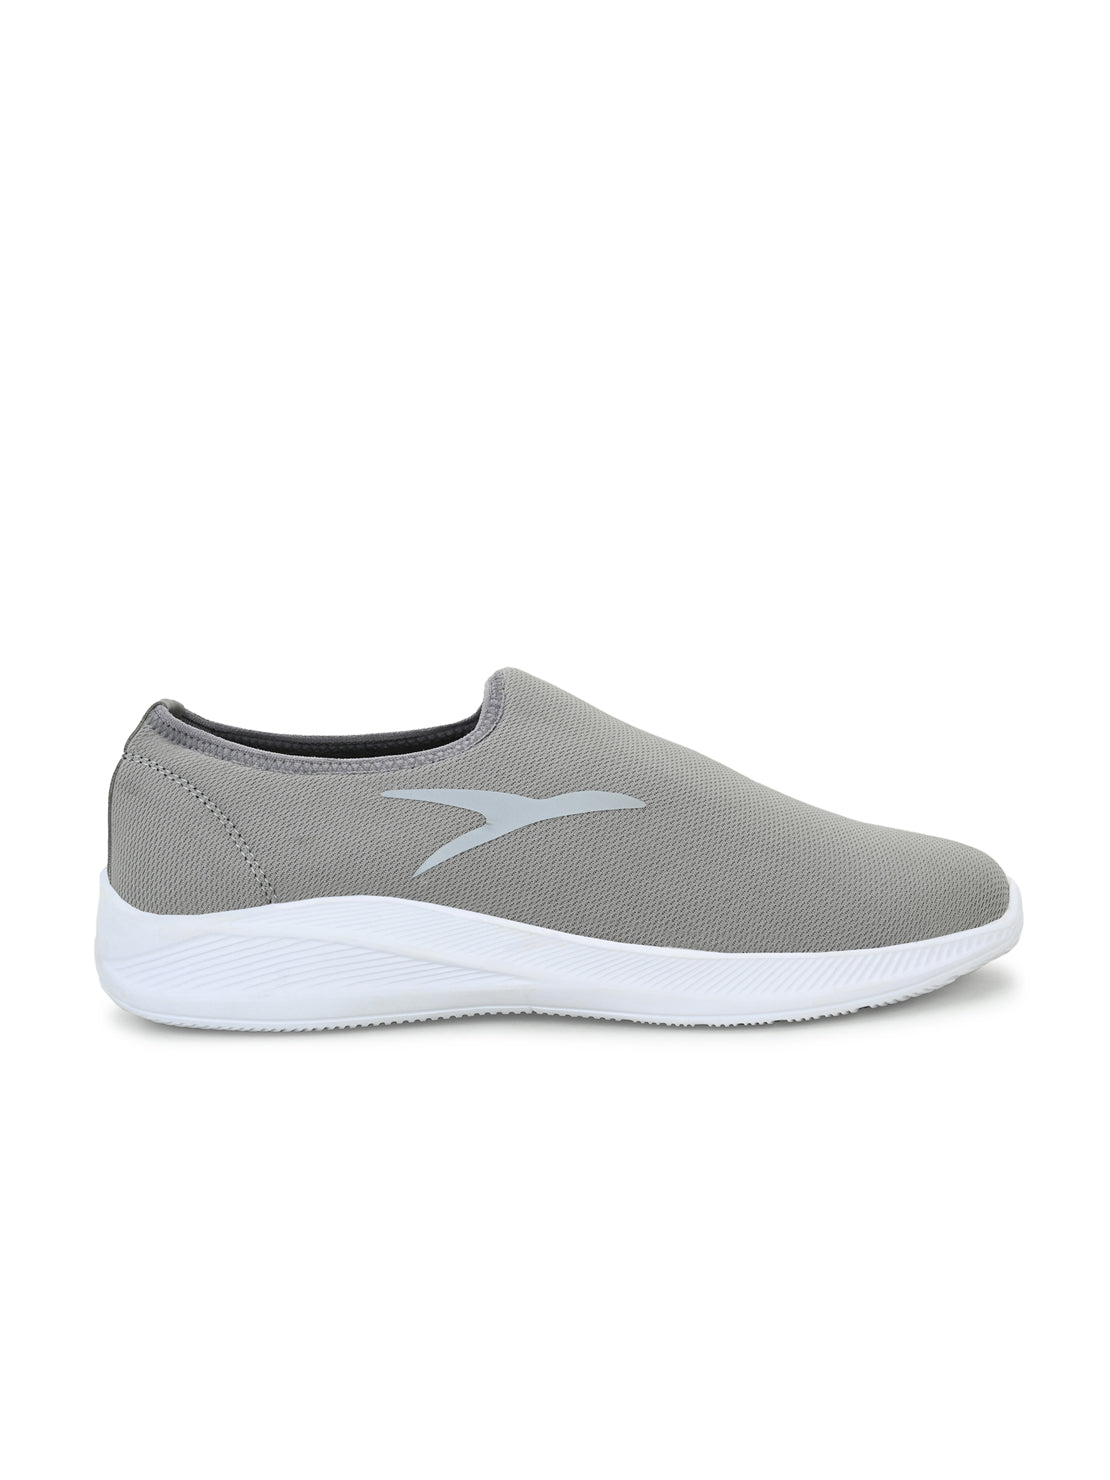 Hirolas® Men's Grey Mesh Walking Sport Shoes (HRL2028GRY)